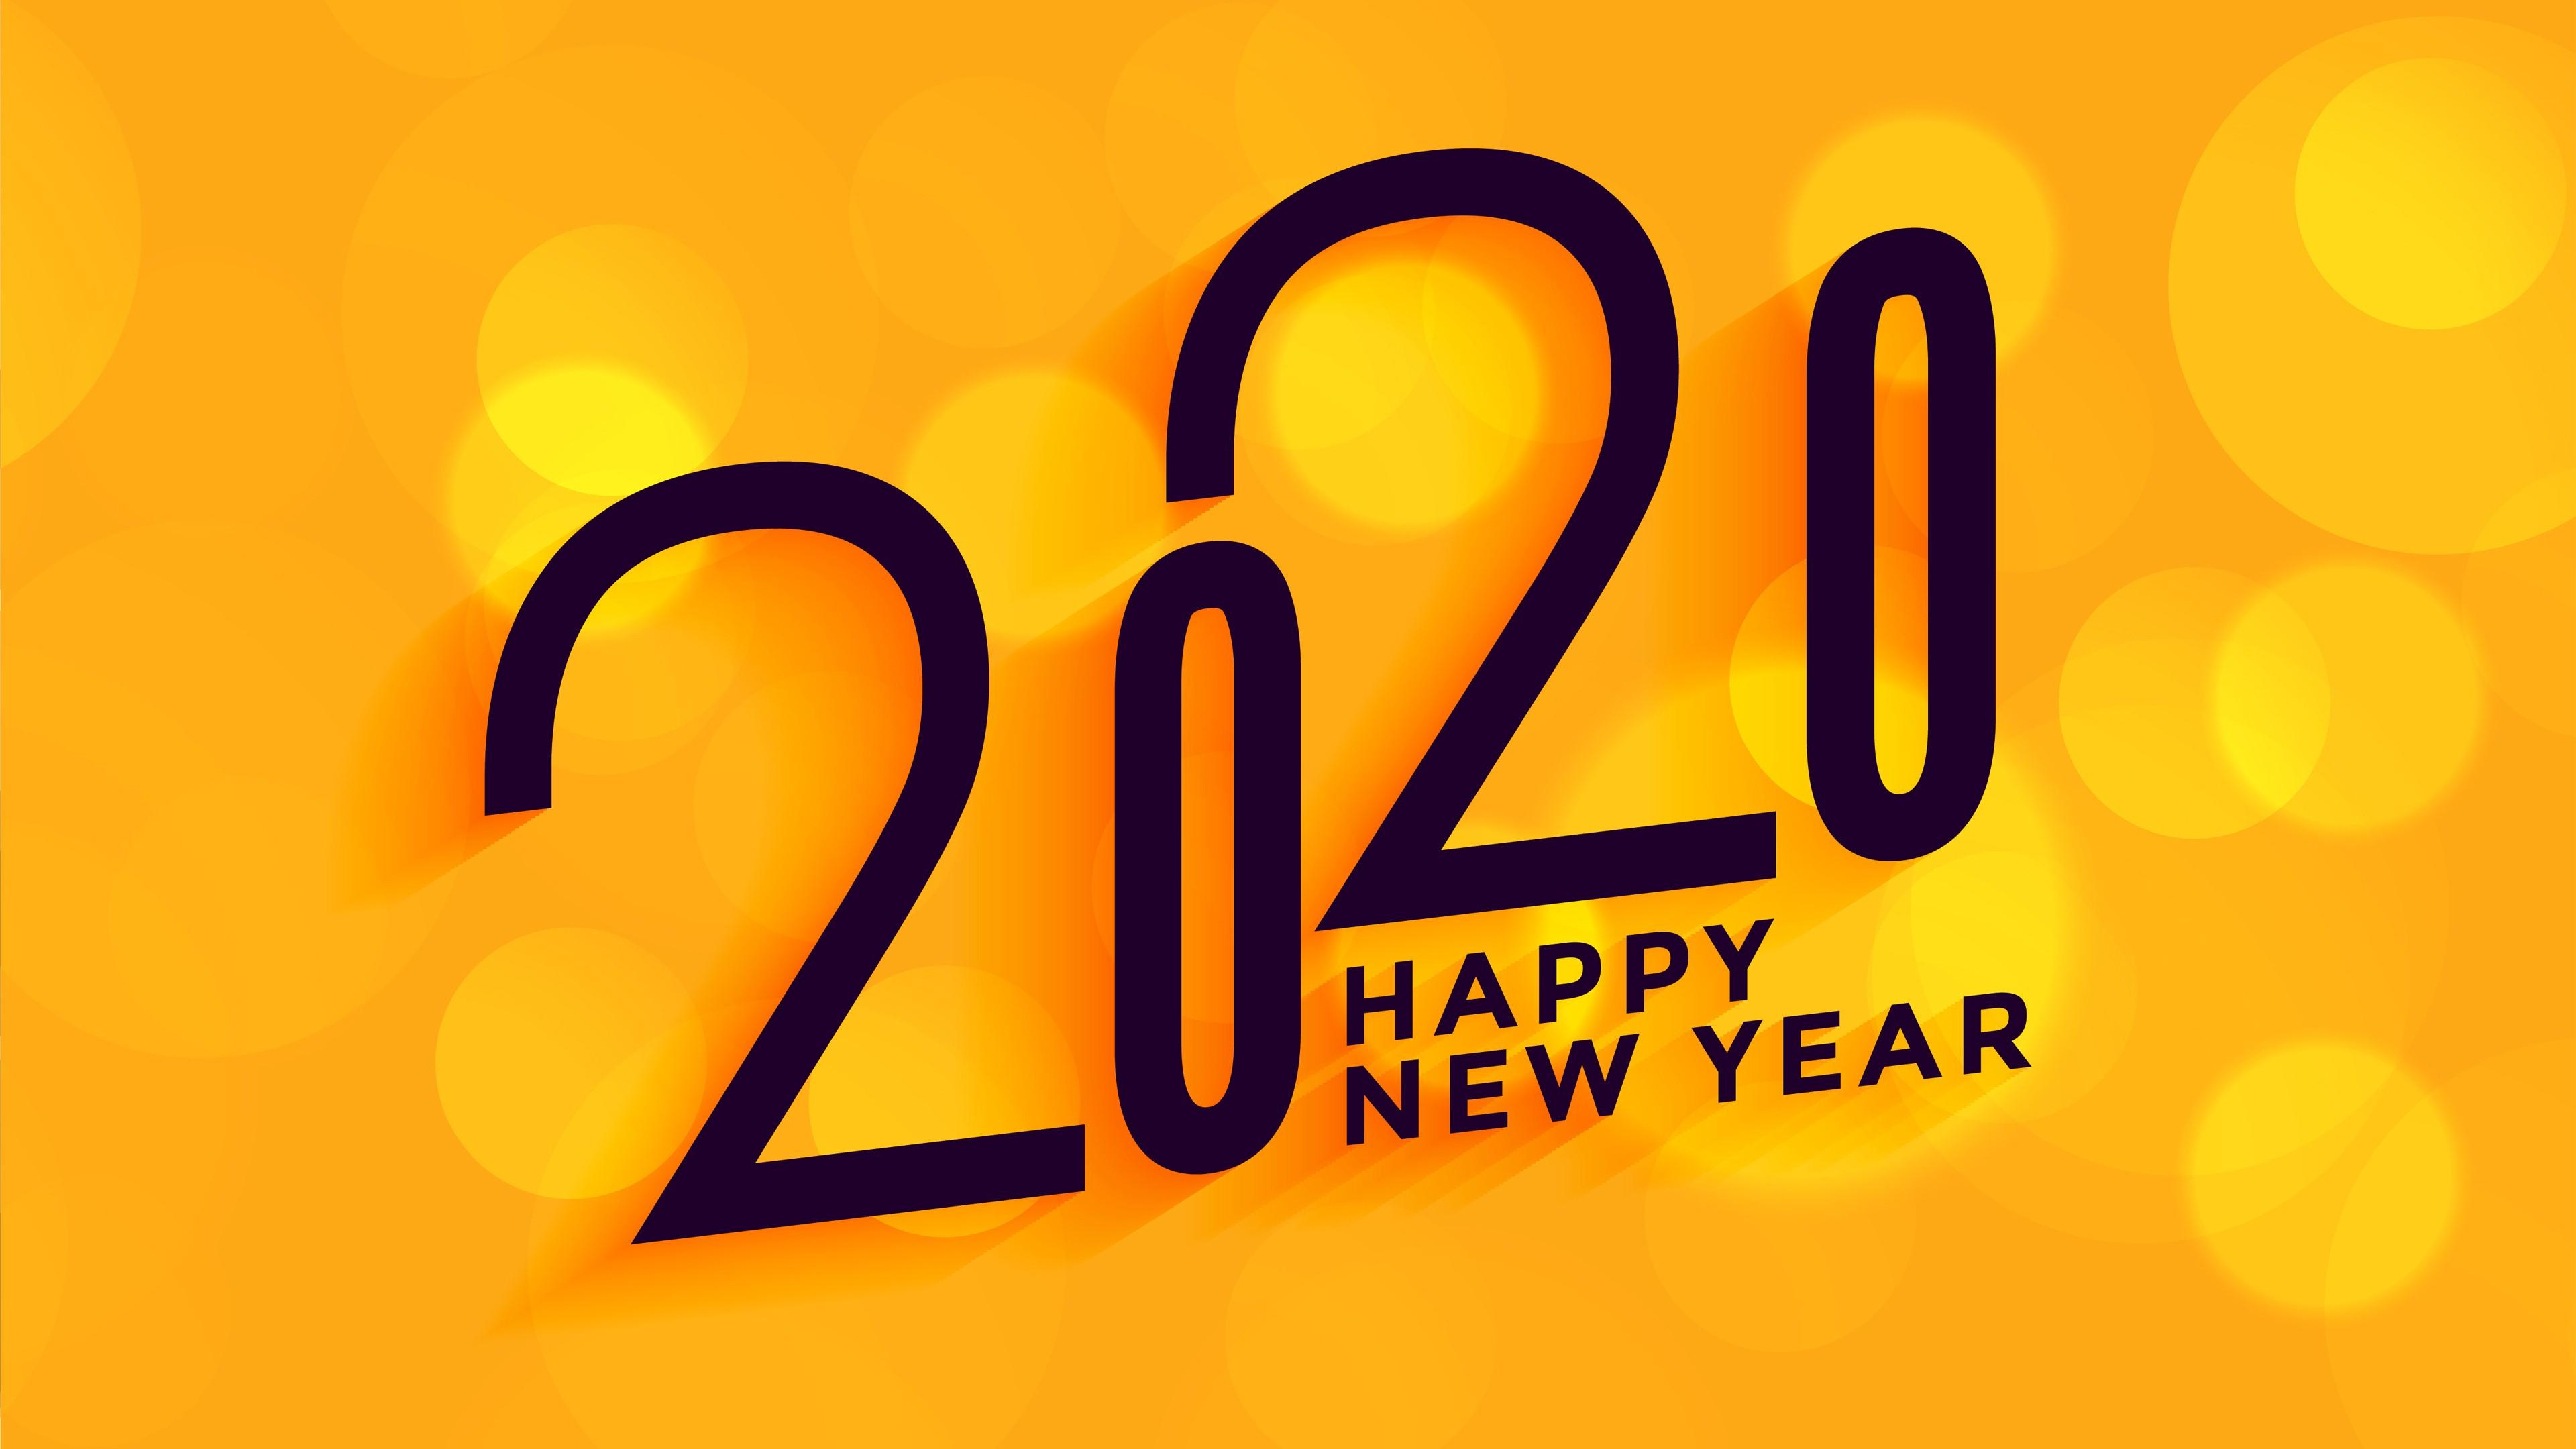 Free download 2020 Happy New Year Yellow 4K Wallpaper HD